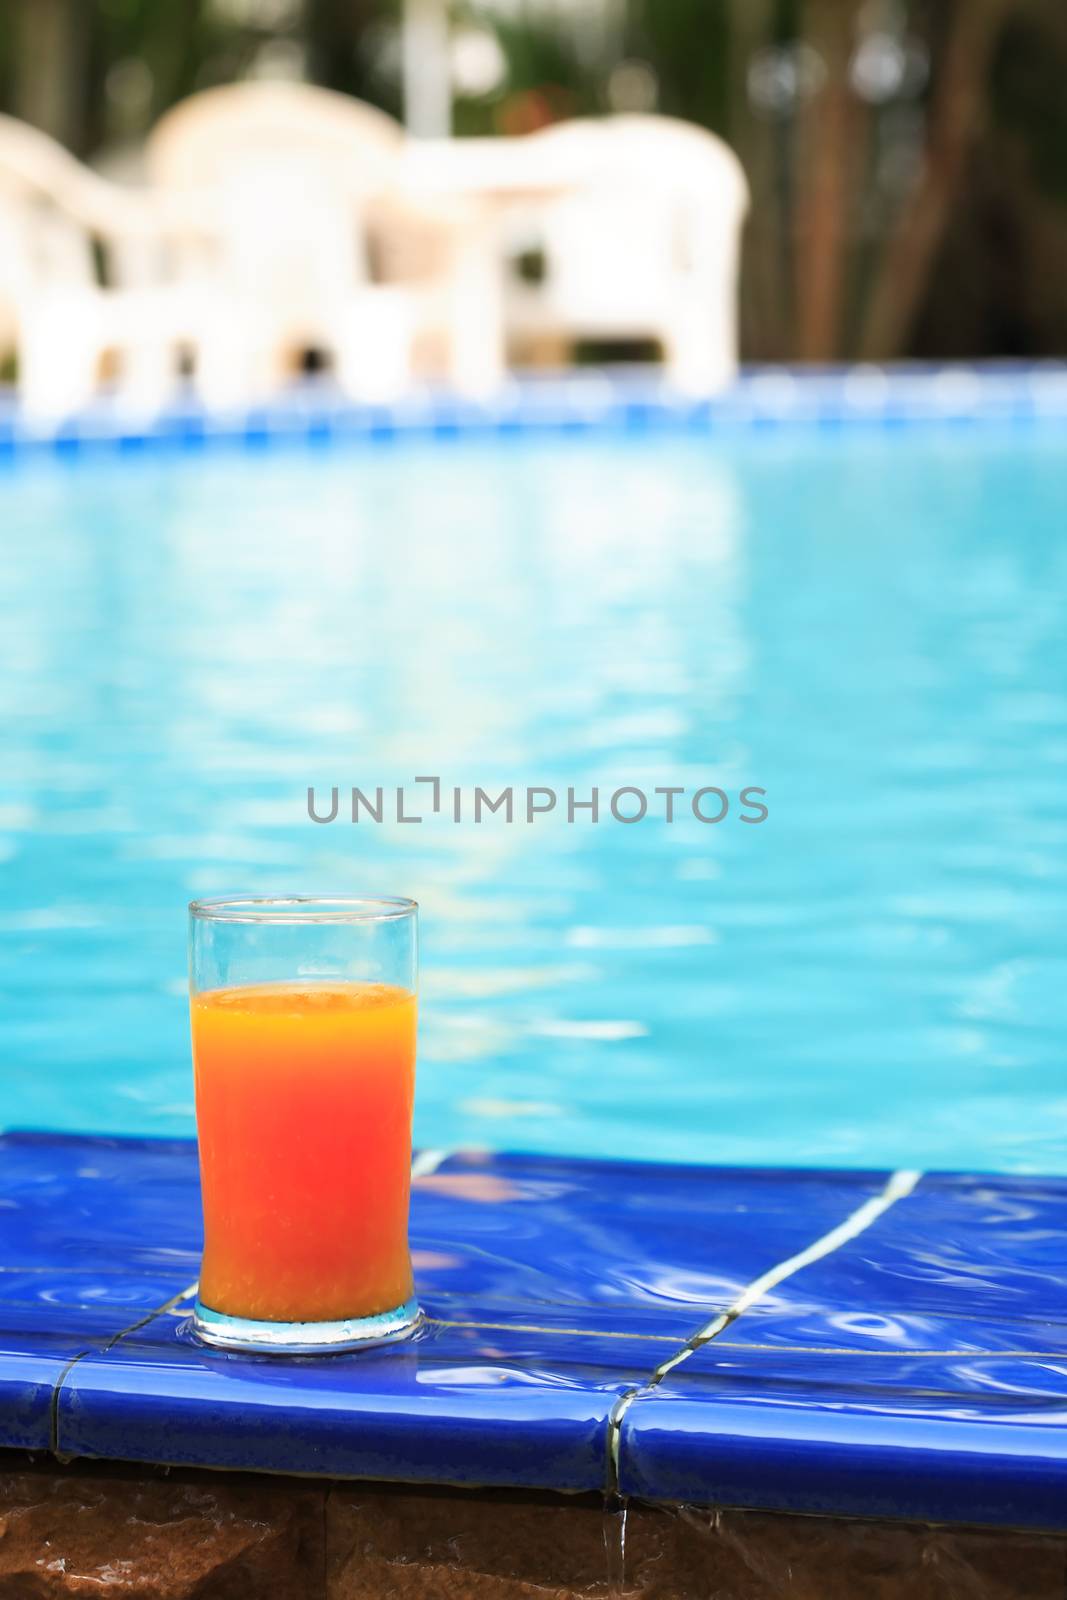 Closeup of orange juice glass standing on border of water pool